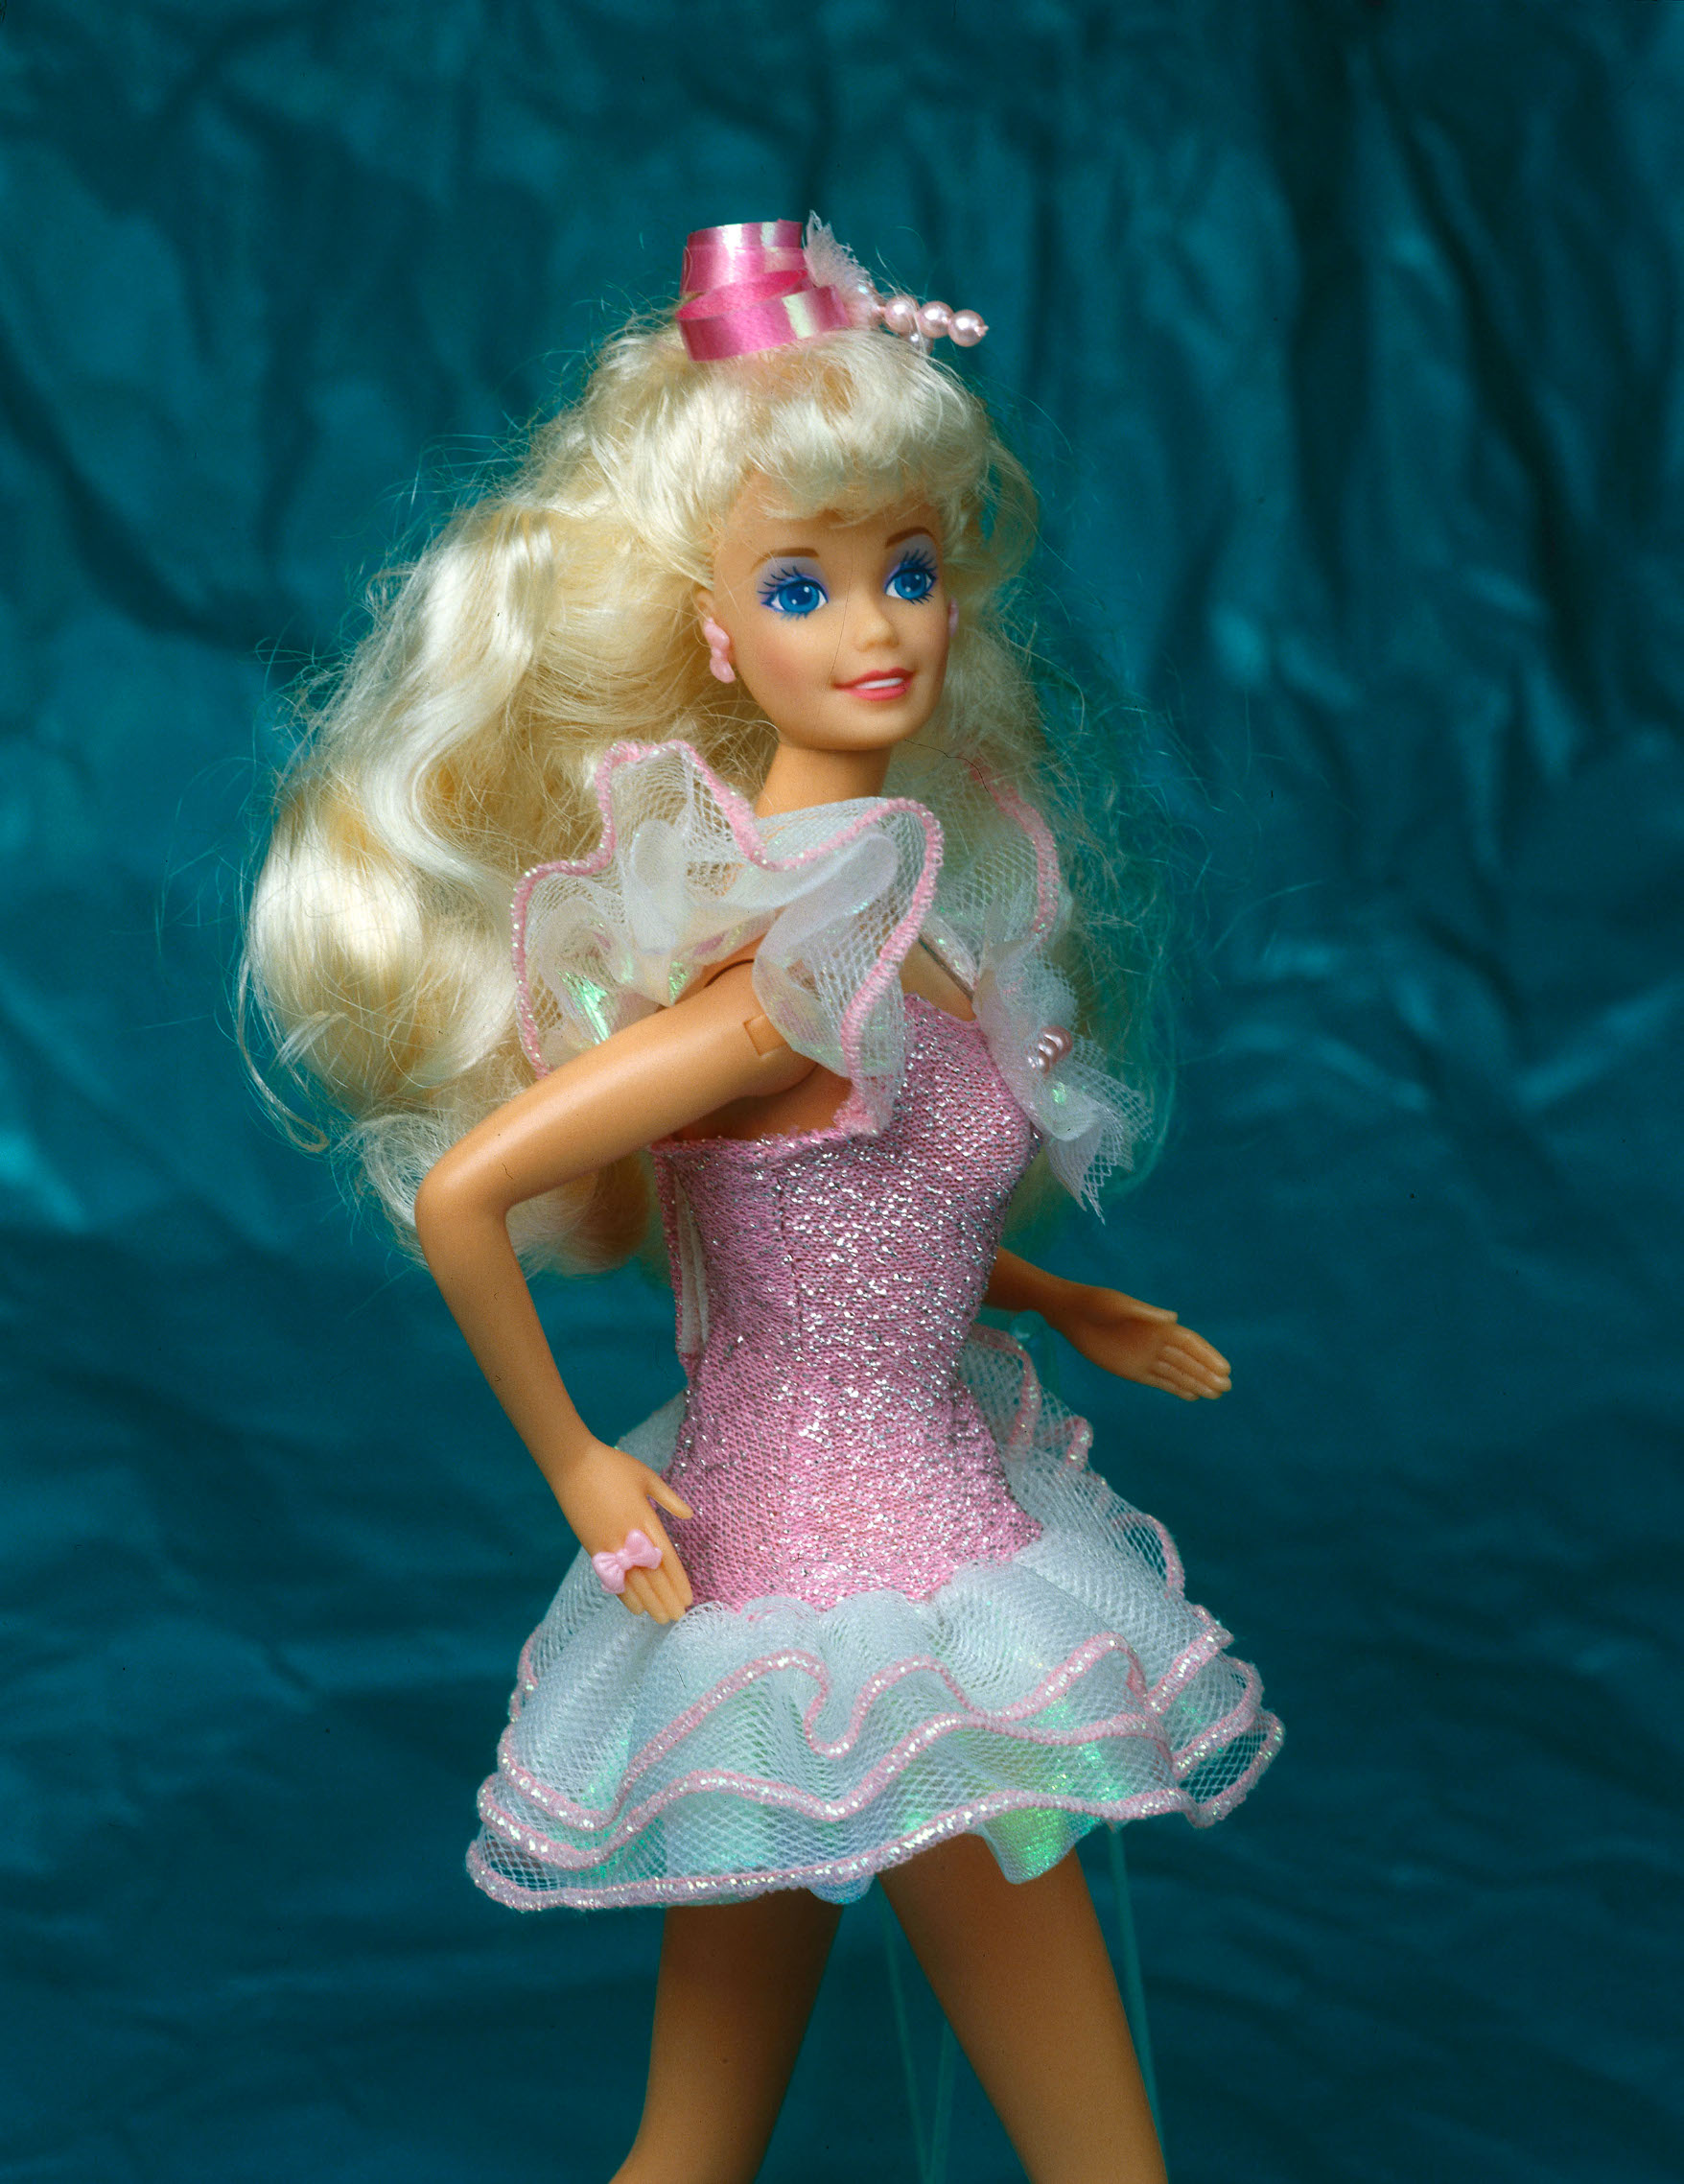 Kind / Spielzeug:
Puppen.

“Beauty Barbie”.

(Spielzeugpuppe der Firma Mattel.)
Foto., Image: 277229233, License: Rights-managed, Restrictions: © www.barbie.com., Model Release: no, Credit line: akg-images / AKG / Profimedia